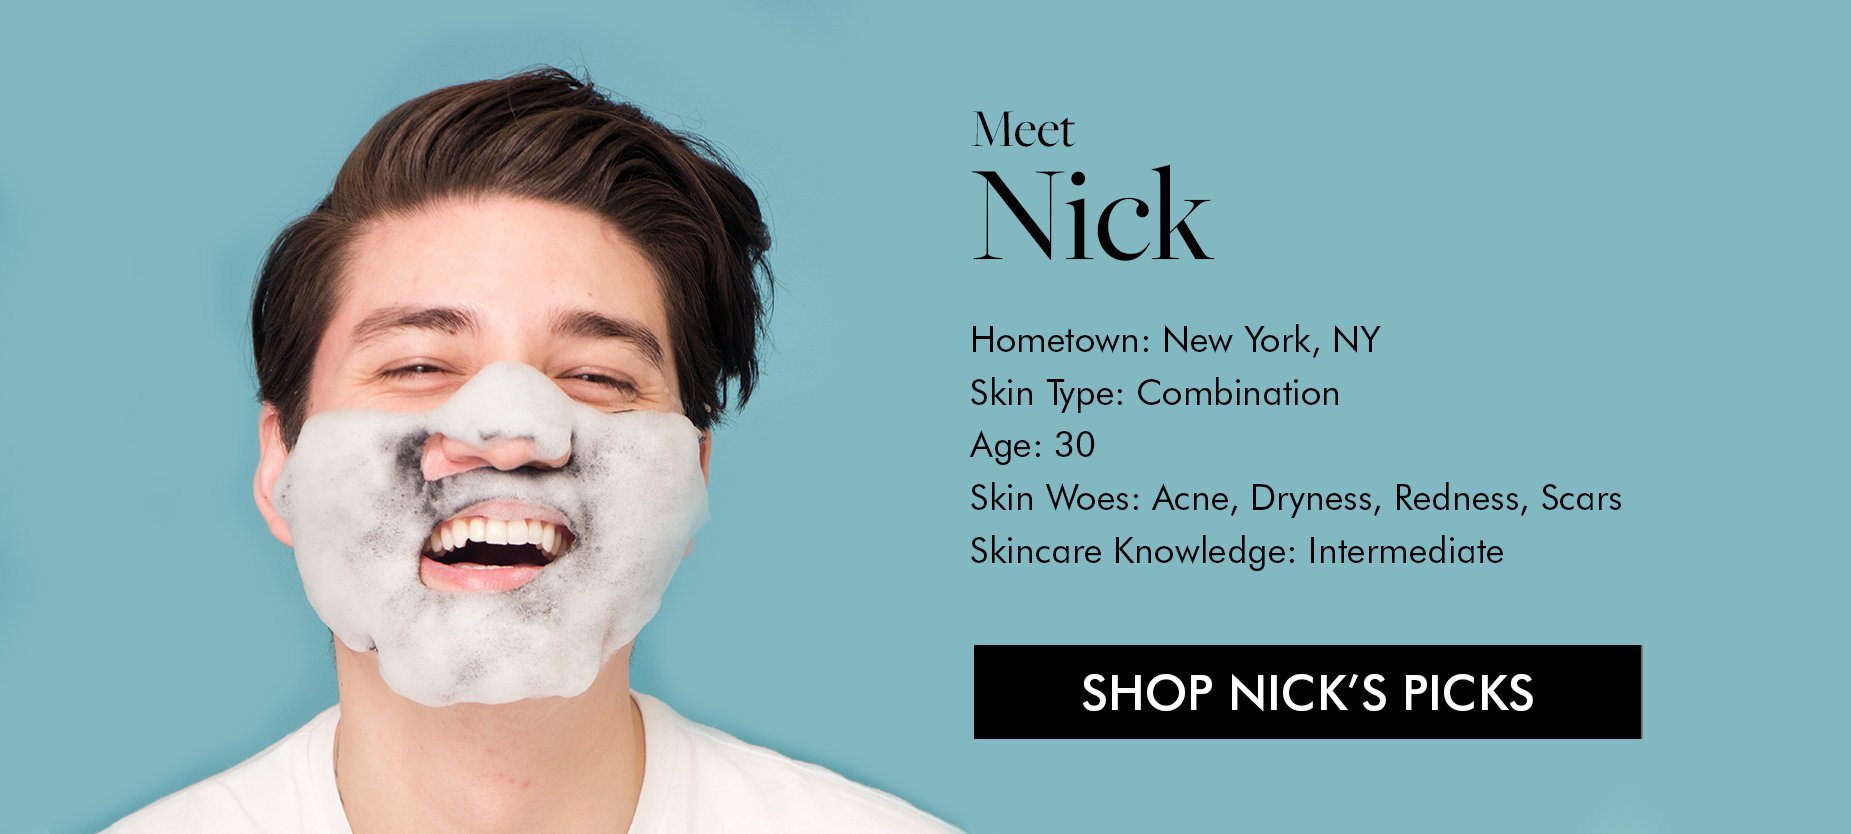 Shop Nick's Picks